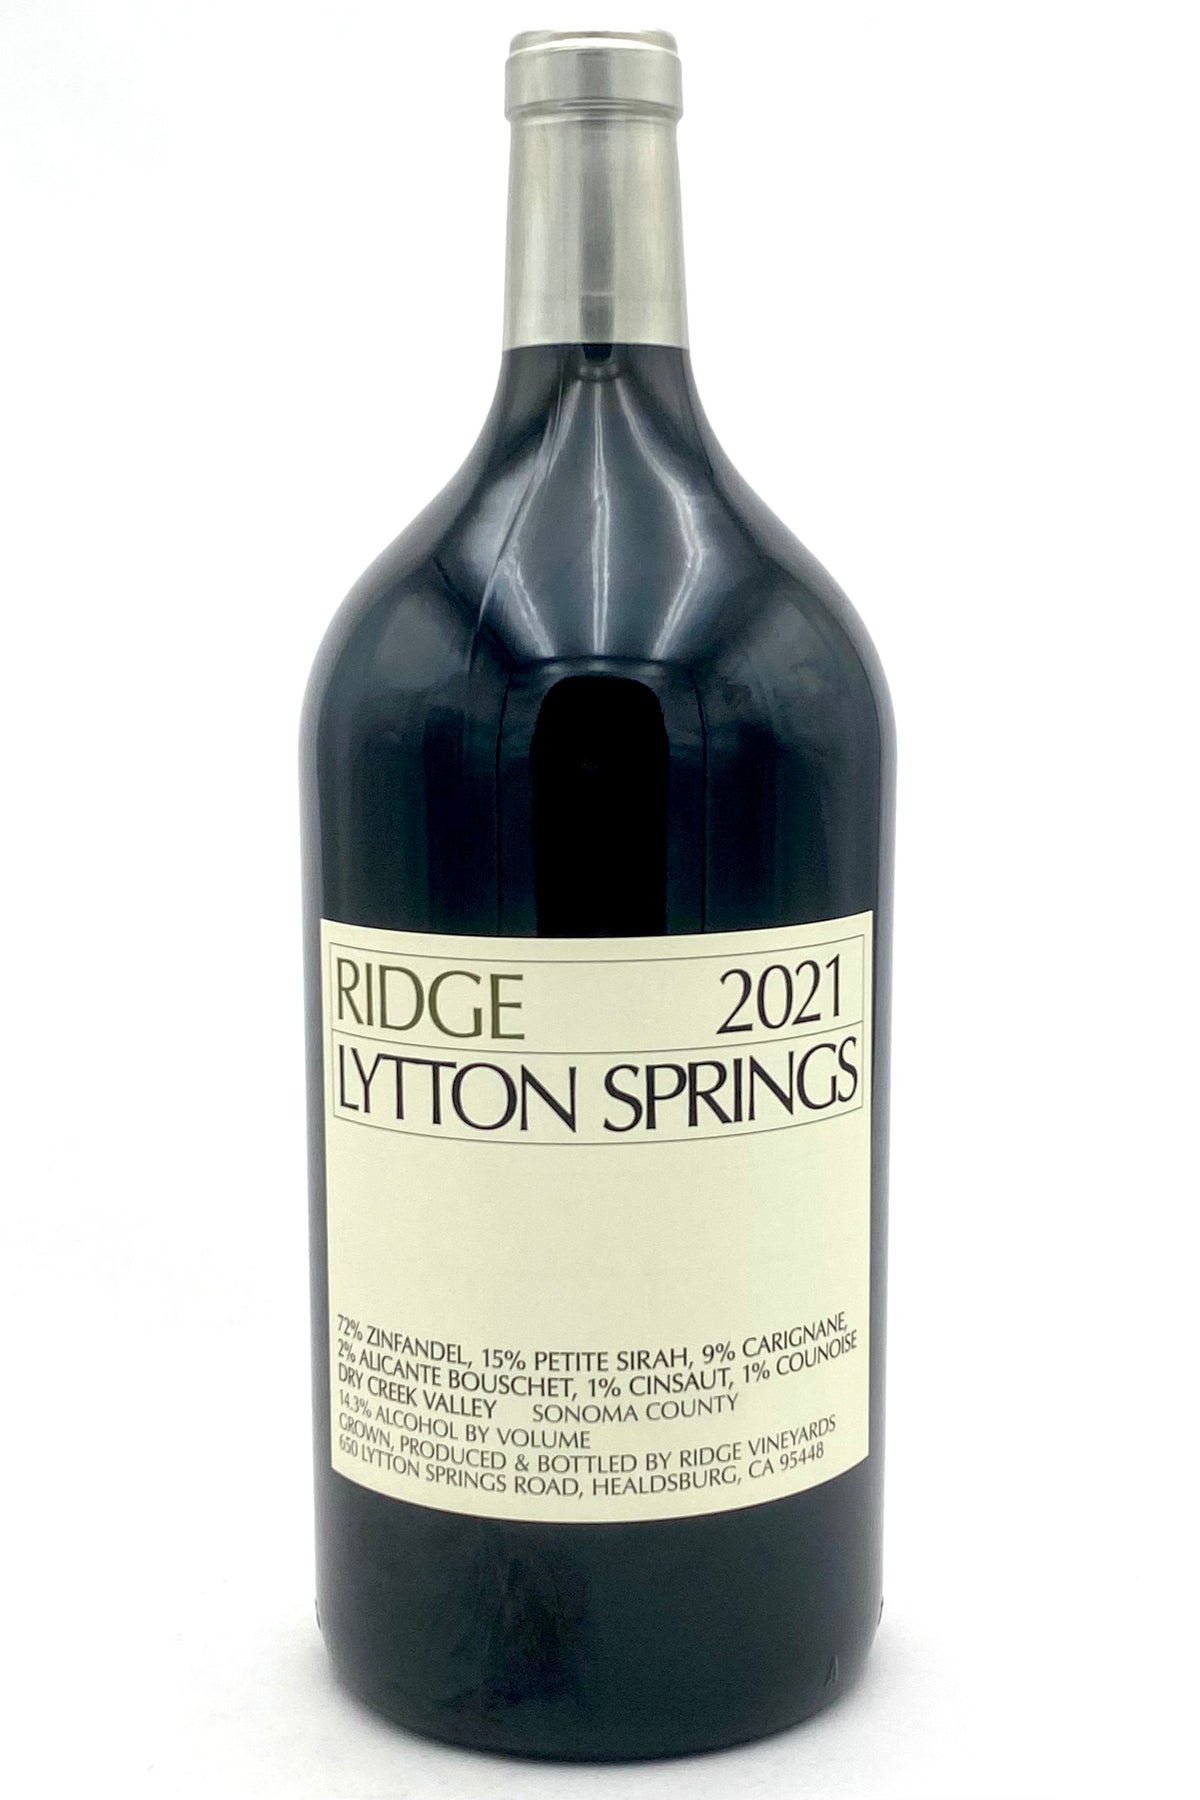 Ridge 2021 Lytton Springs Red Wine 3000 ml (3L)